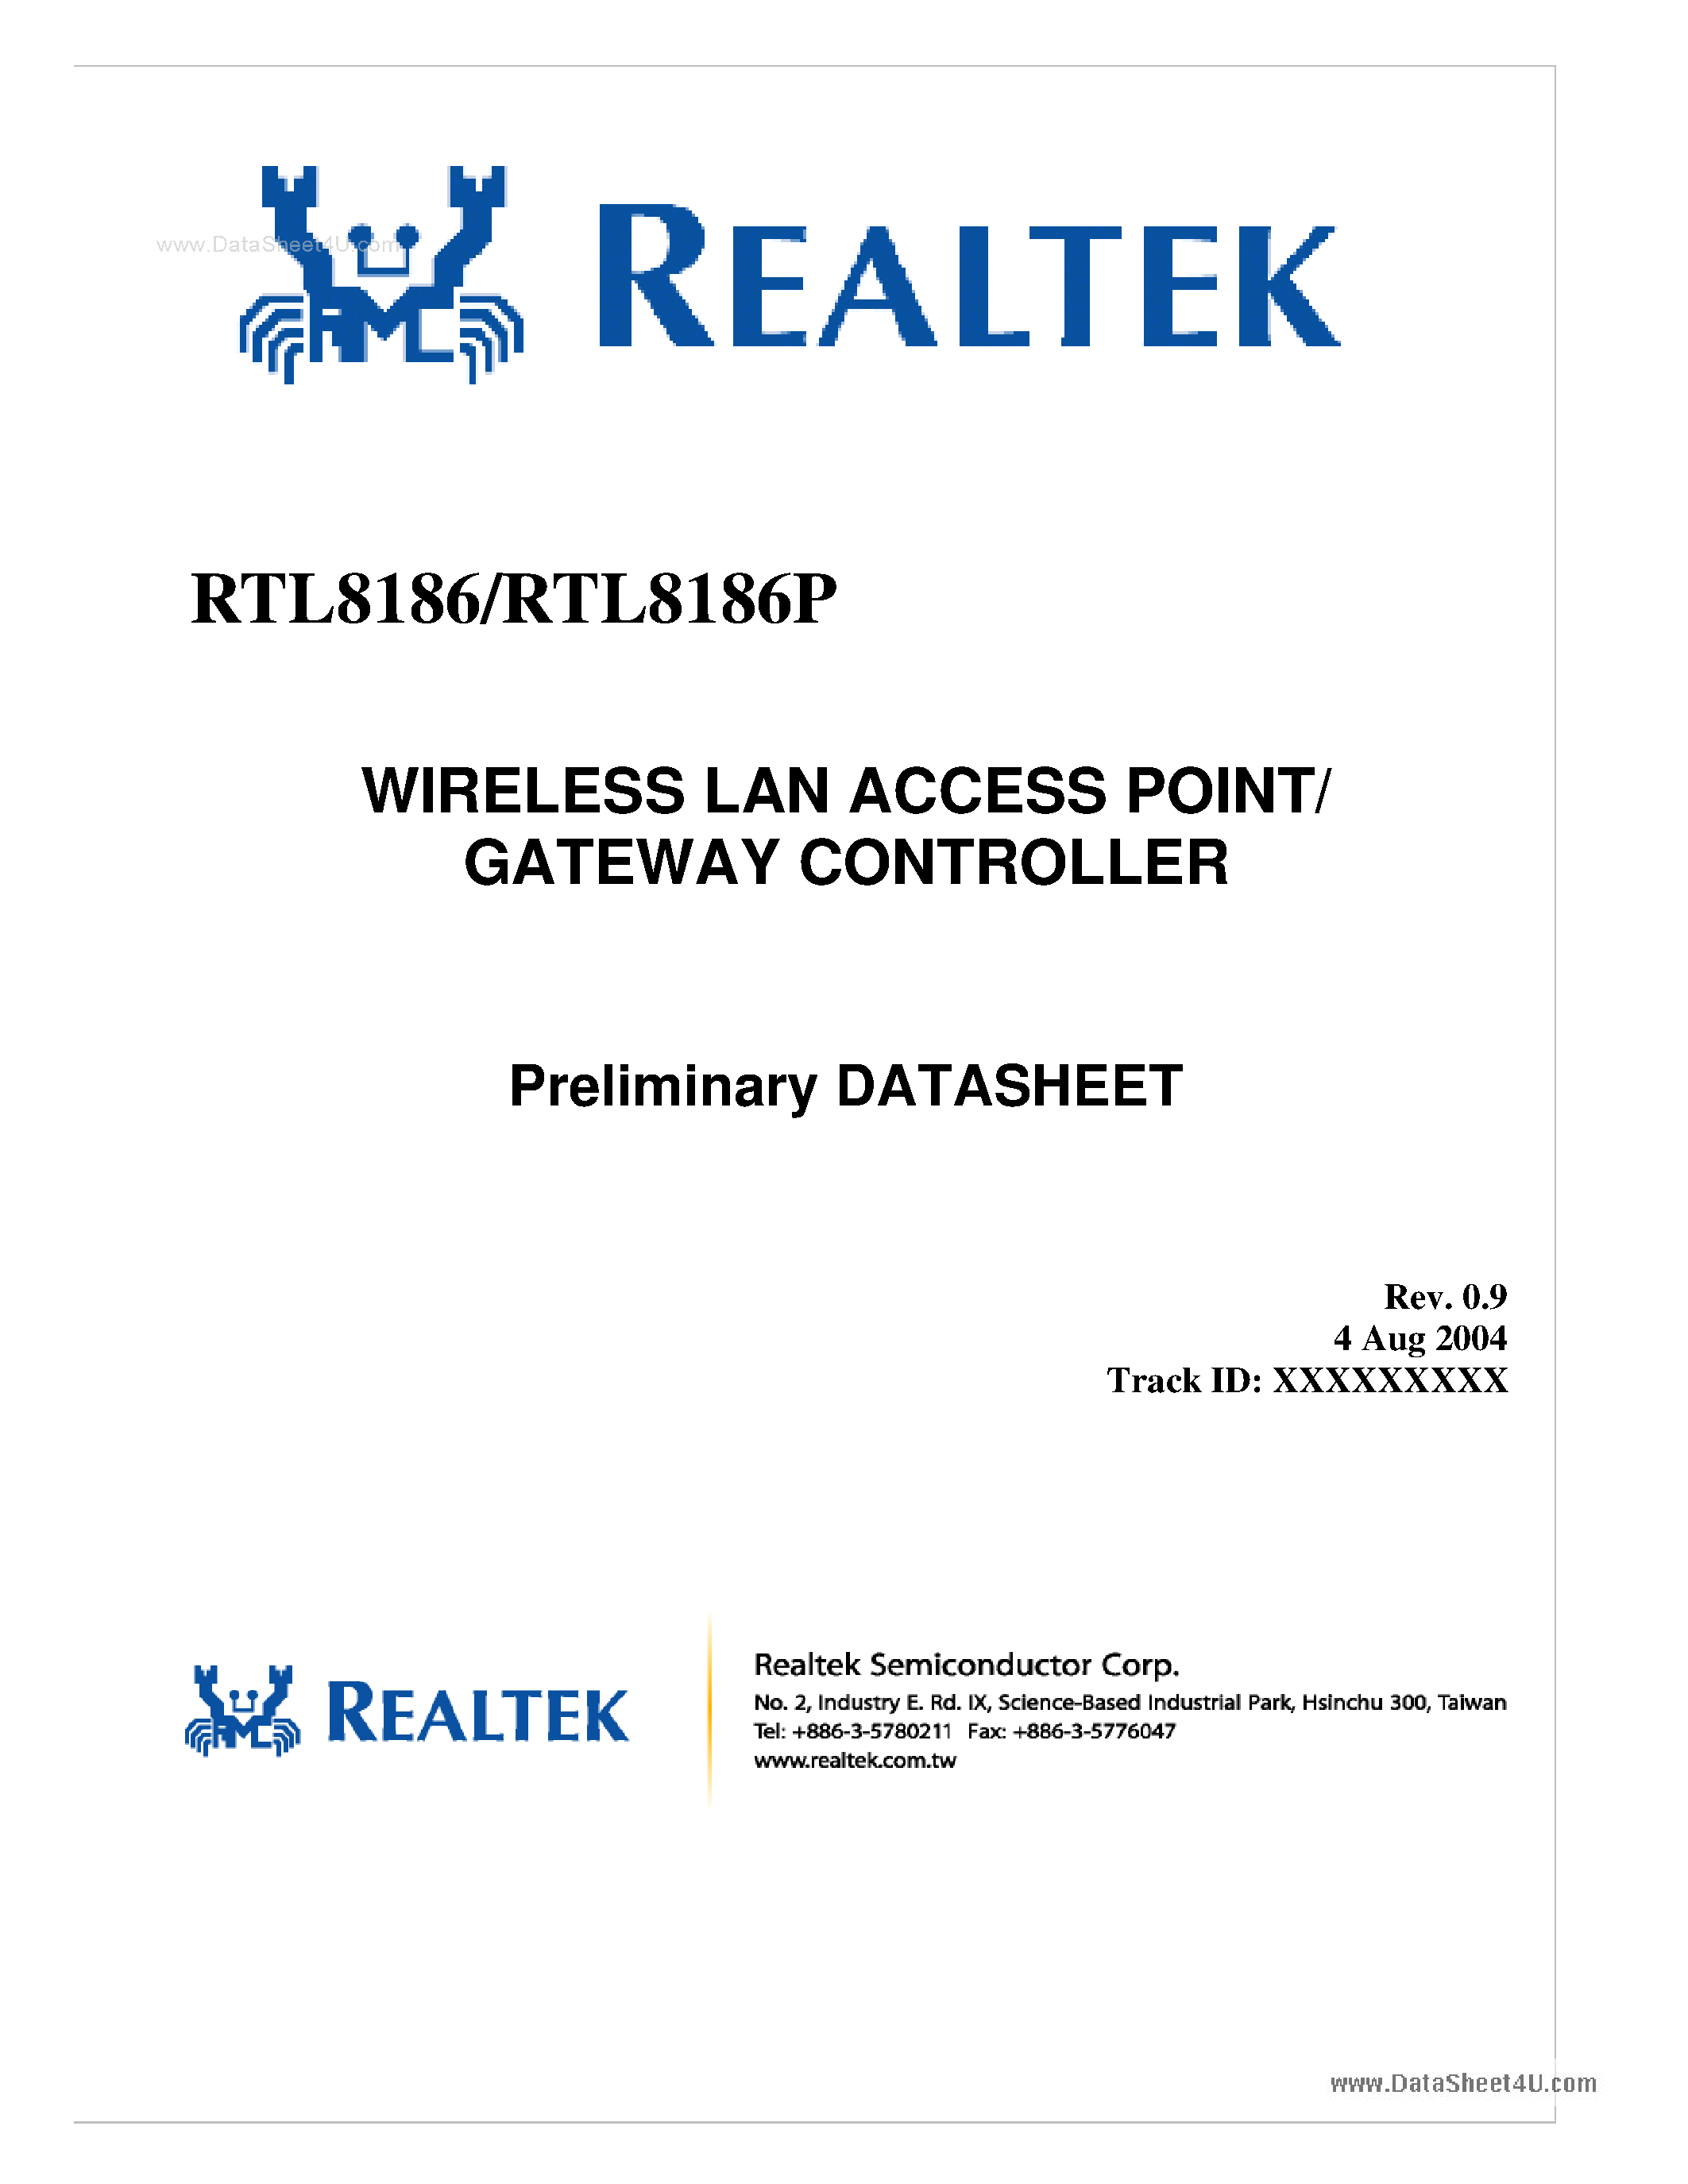 Даташит RTL8186 - Wireless LAN Access Point/Gateway Controller страница 1